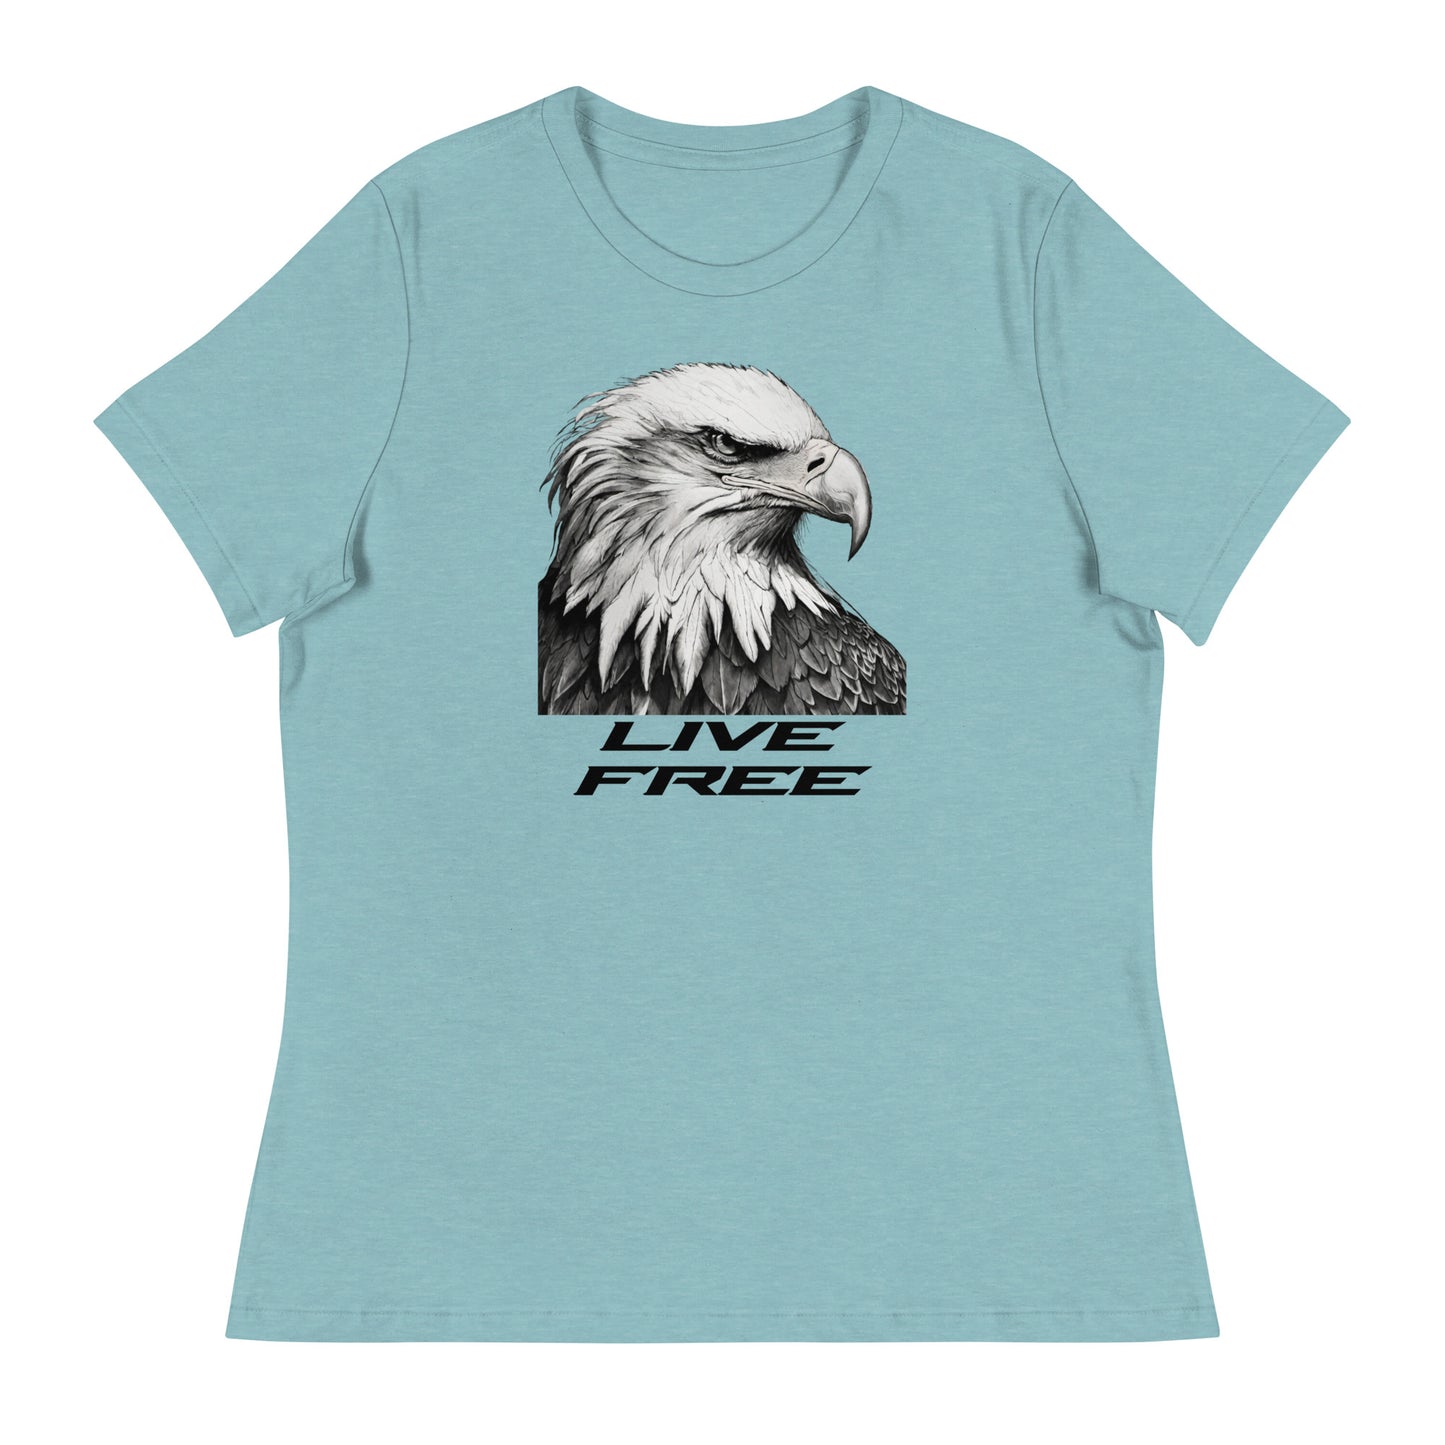 Live Free Women's T-Shirt Heather Blue Lagoon